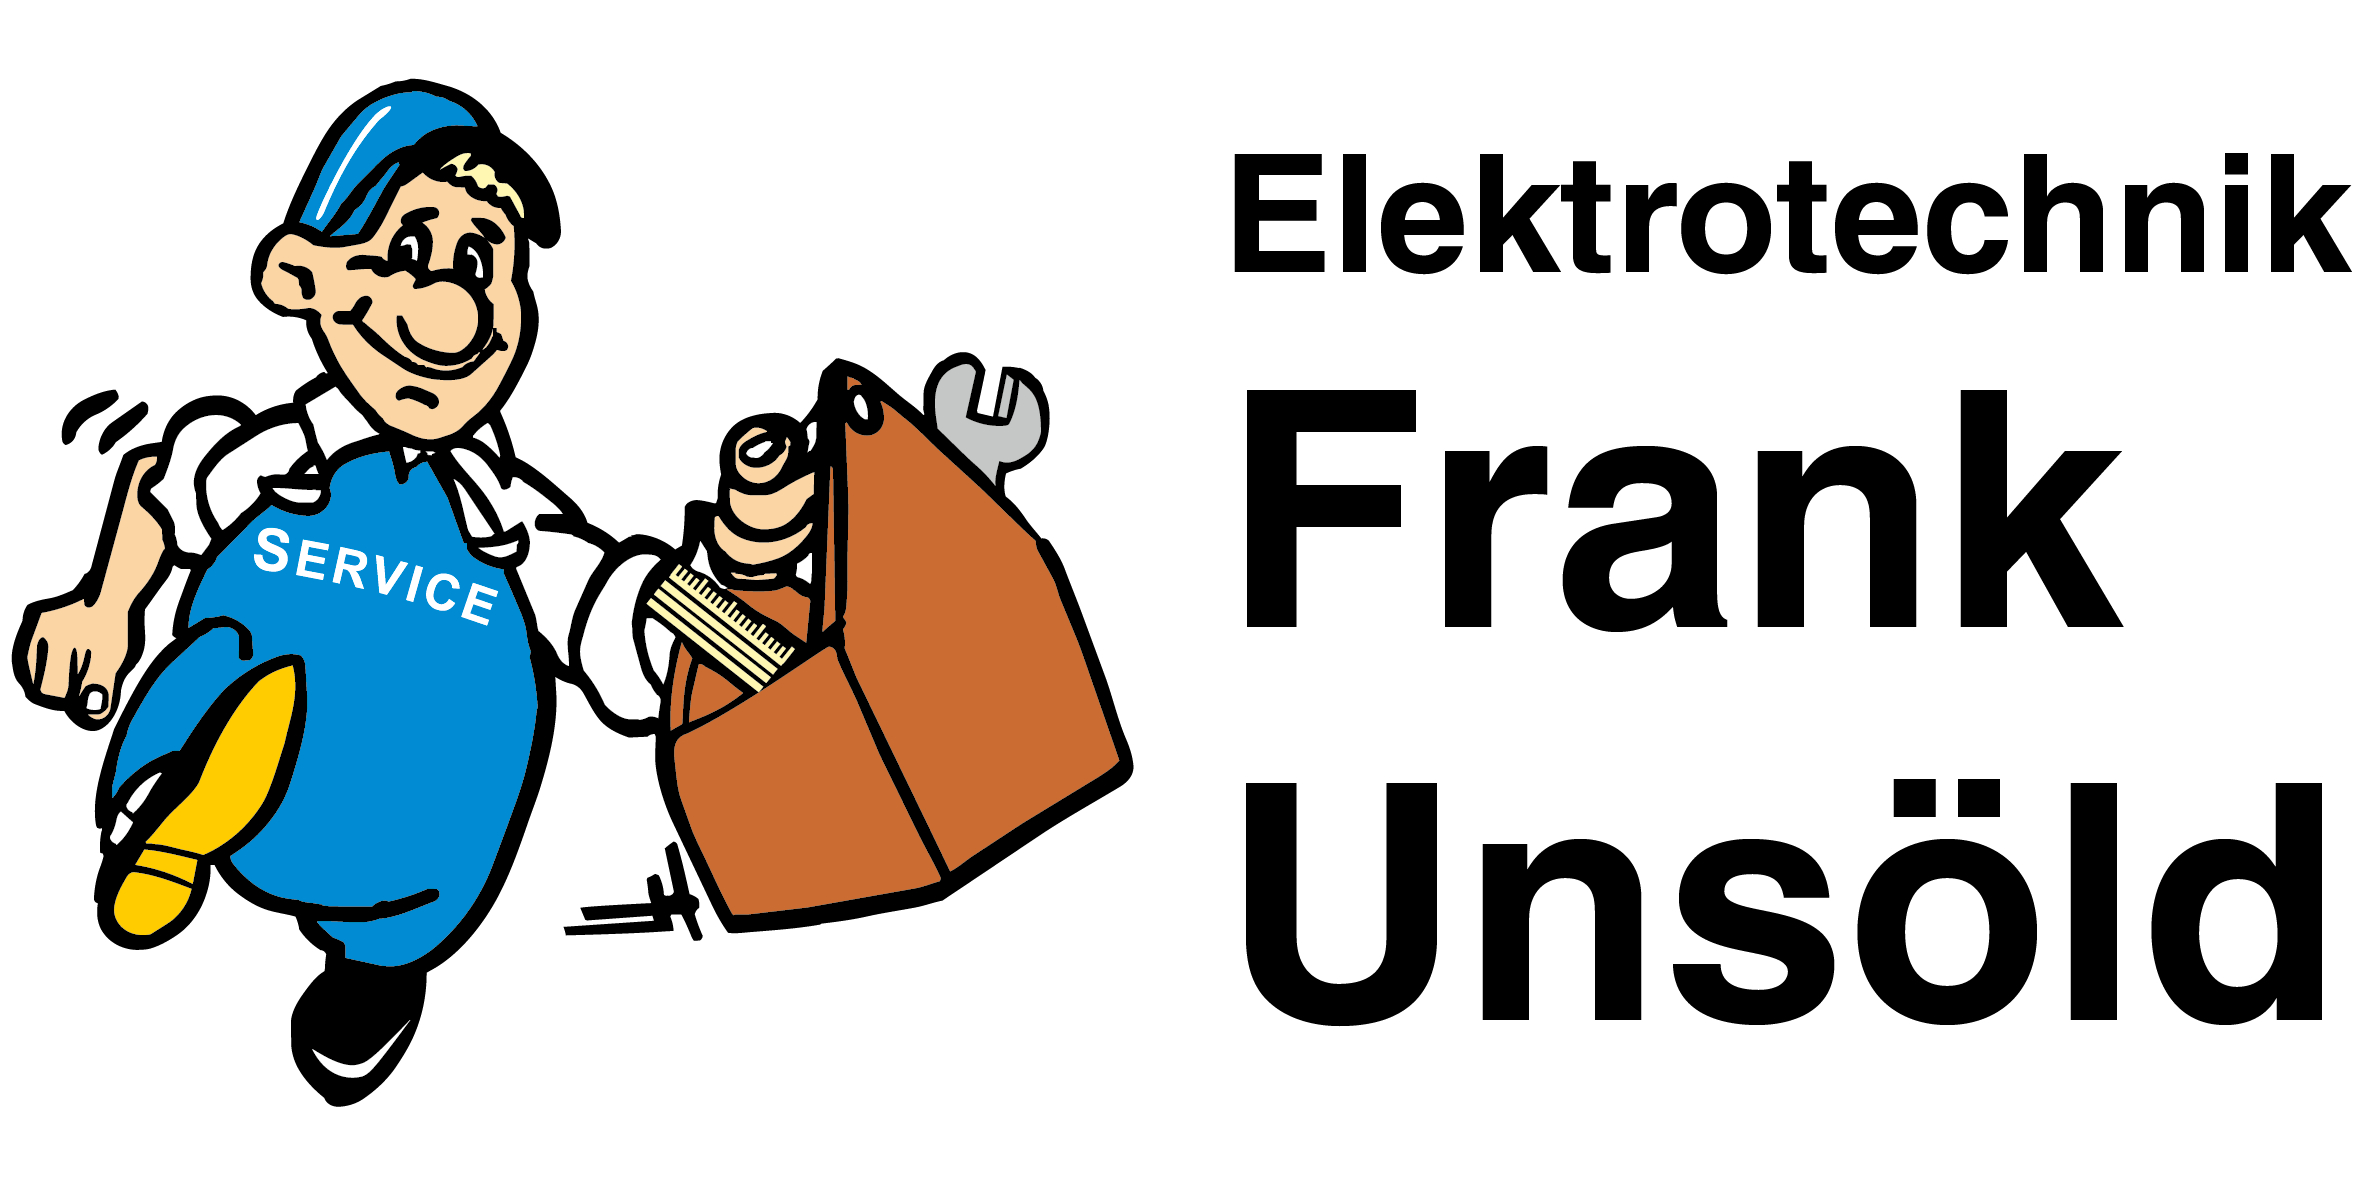 Elektrotechnik Frank Unsöld in Mühlacker